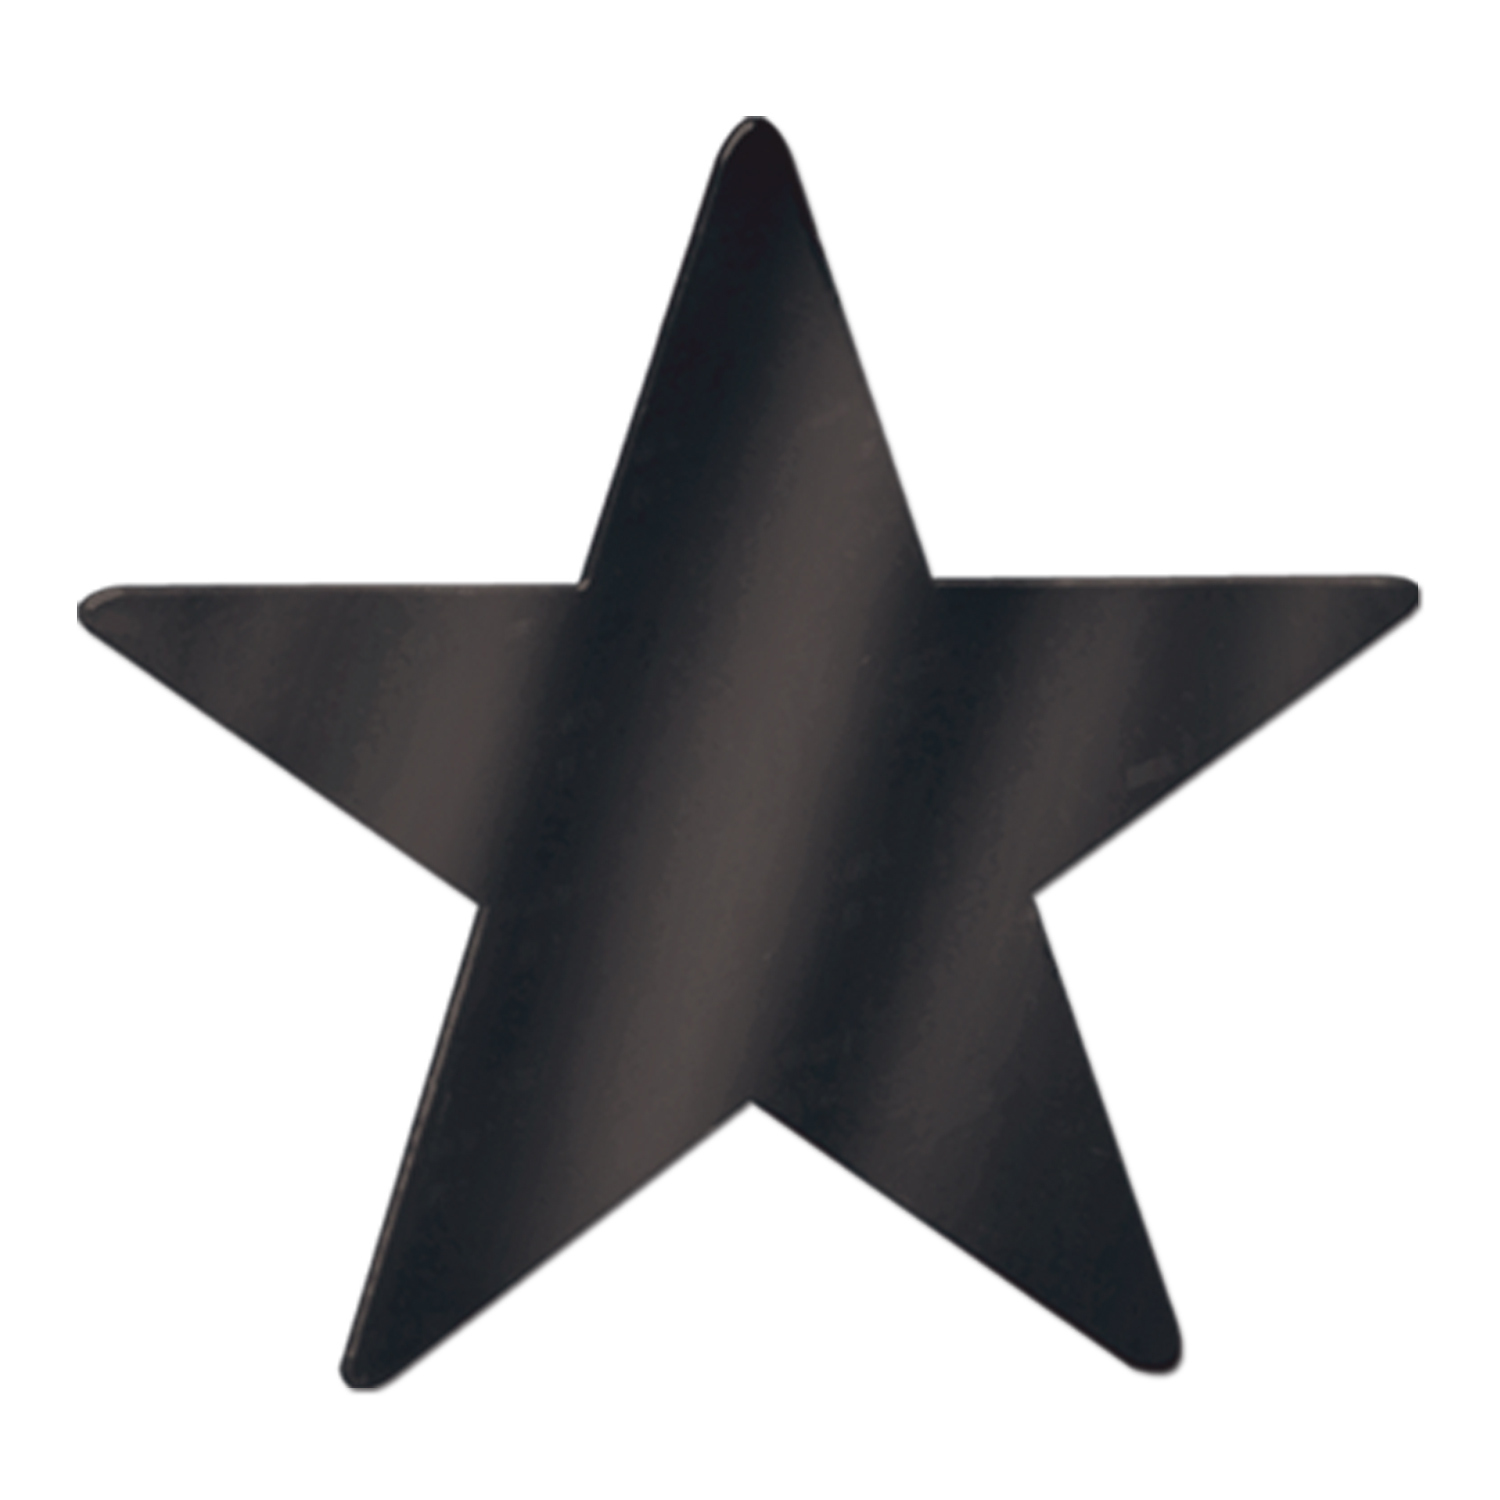 Black printed card stock star cutout.